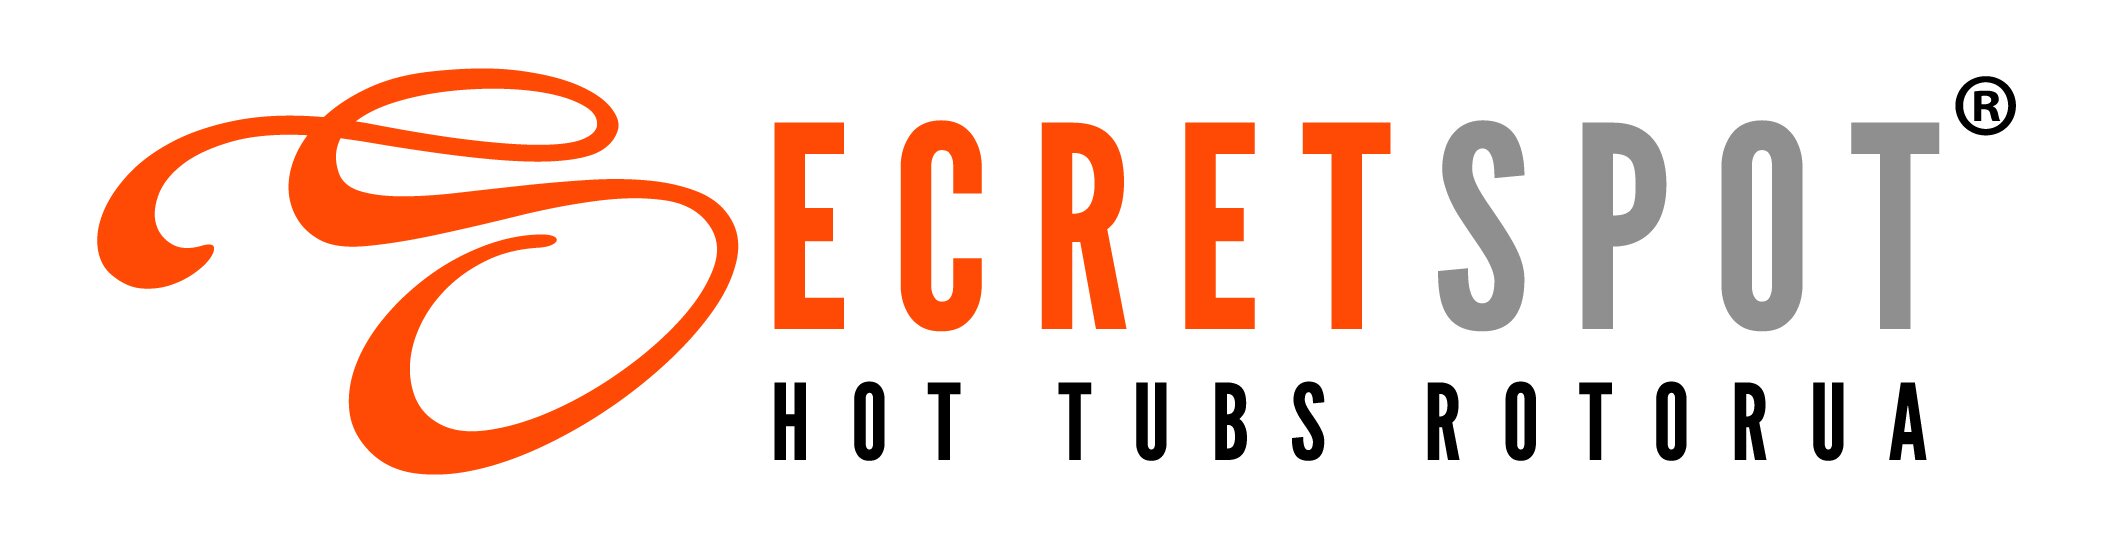 Secret spot logo large.jpeg